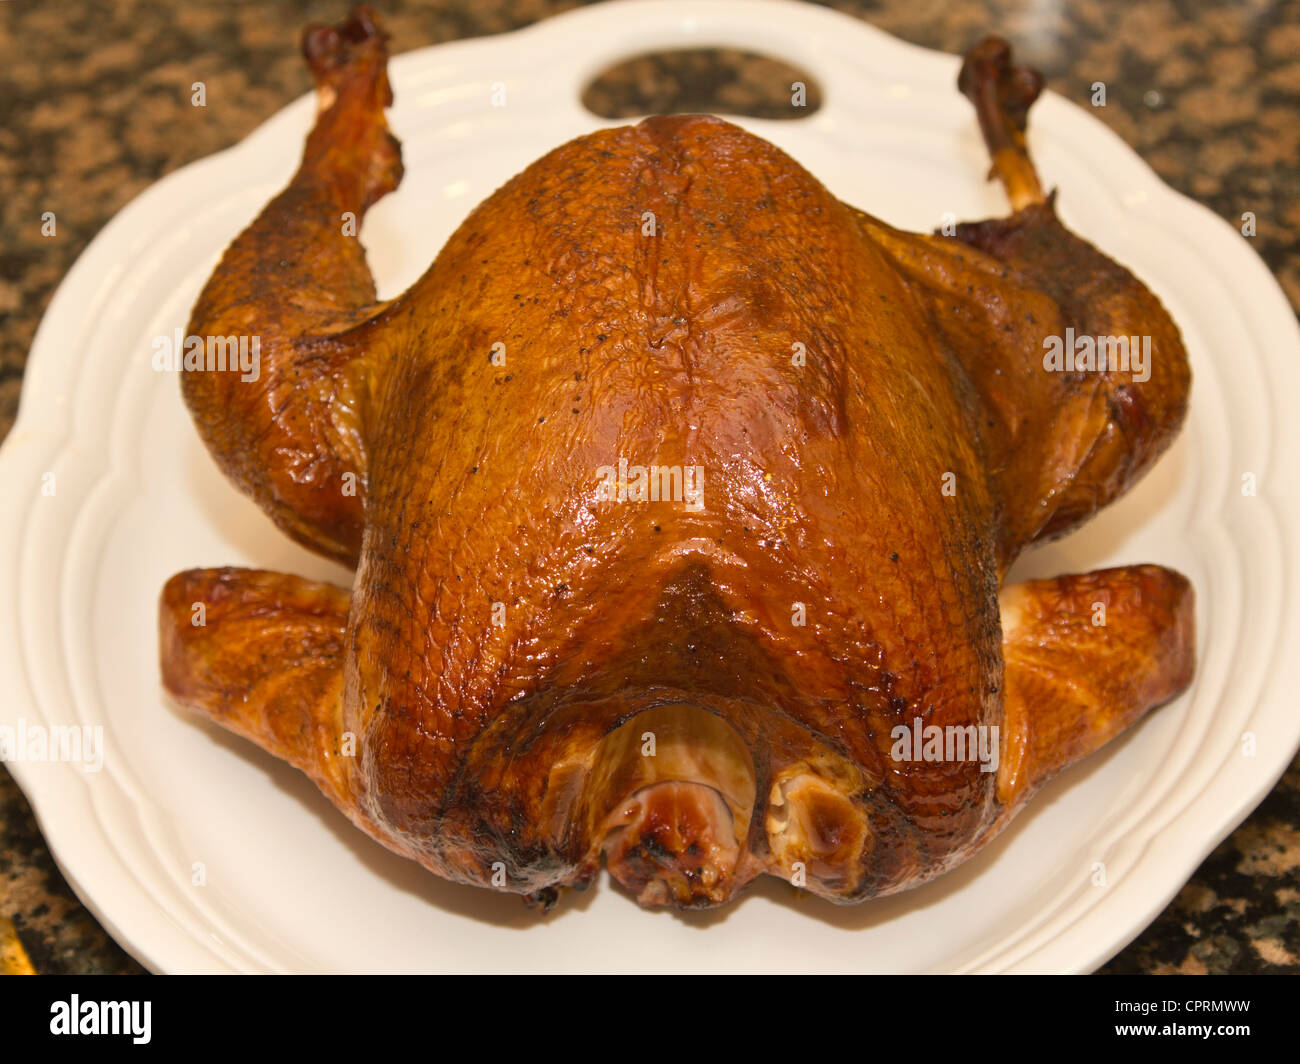 https://c8.alamy.com/comp/CPRMWW/cooked-turkey-on-platter-CPRMWW.jpg